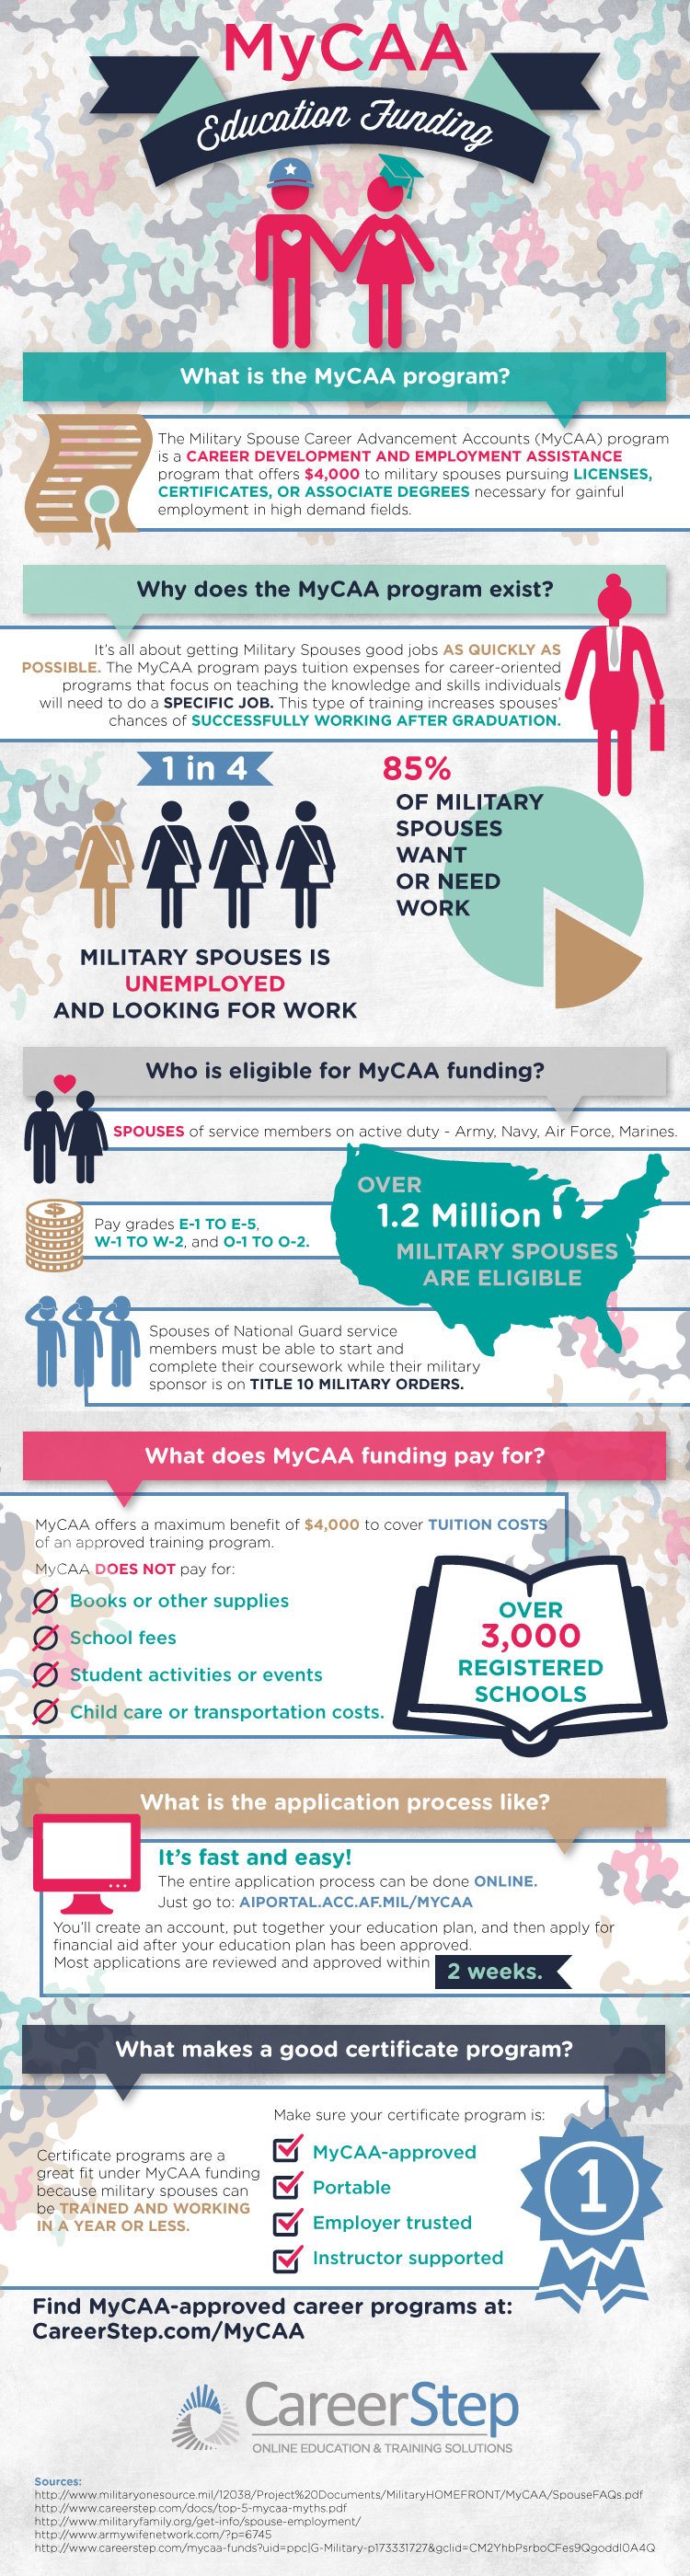 MyCAA Education Funding infographic